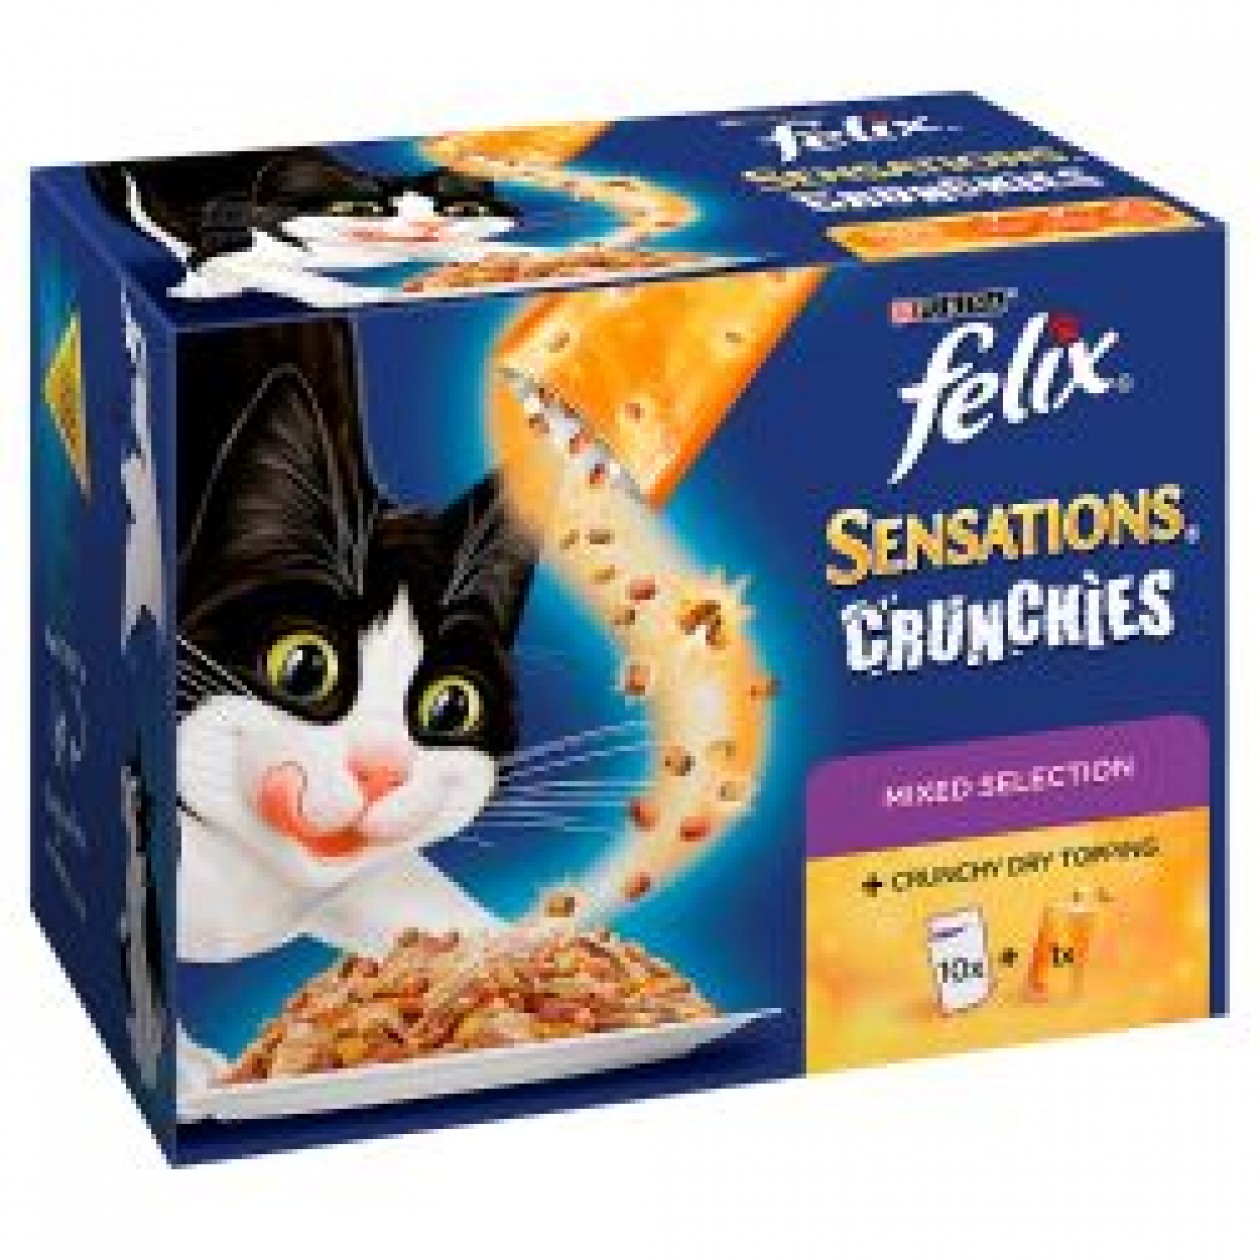 Felix Sensations Crunchies Mixed Selection 10 Pack, 100g